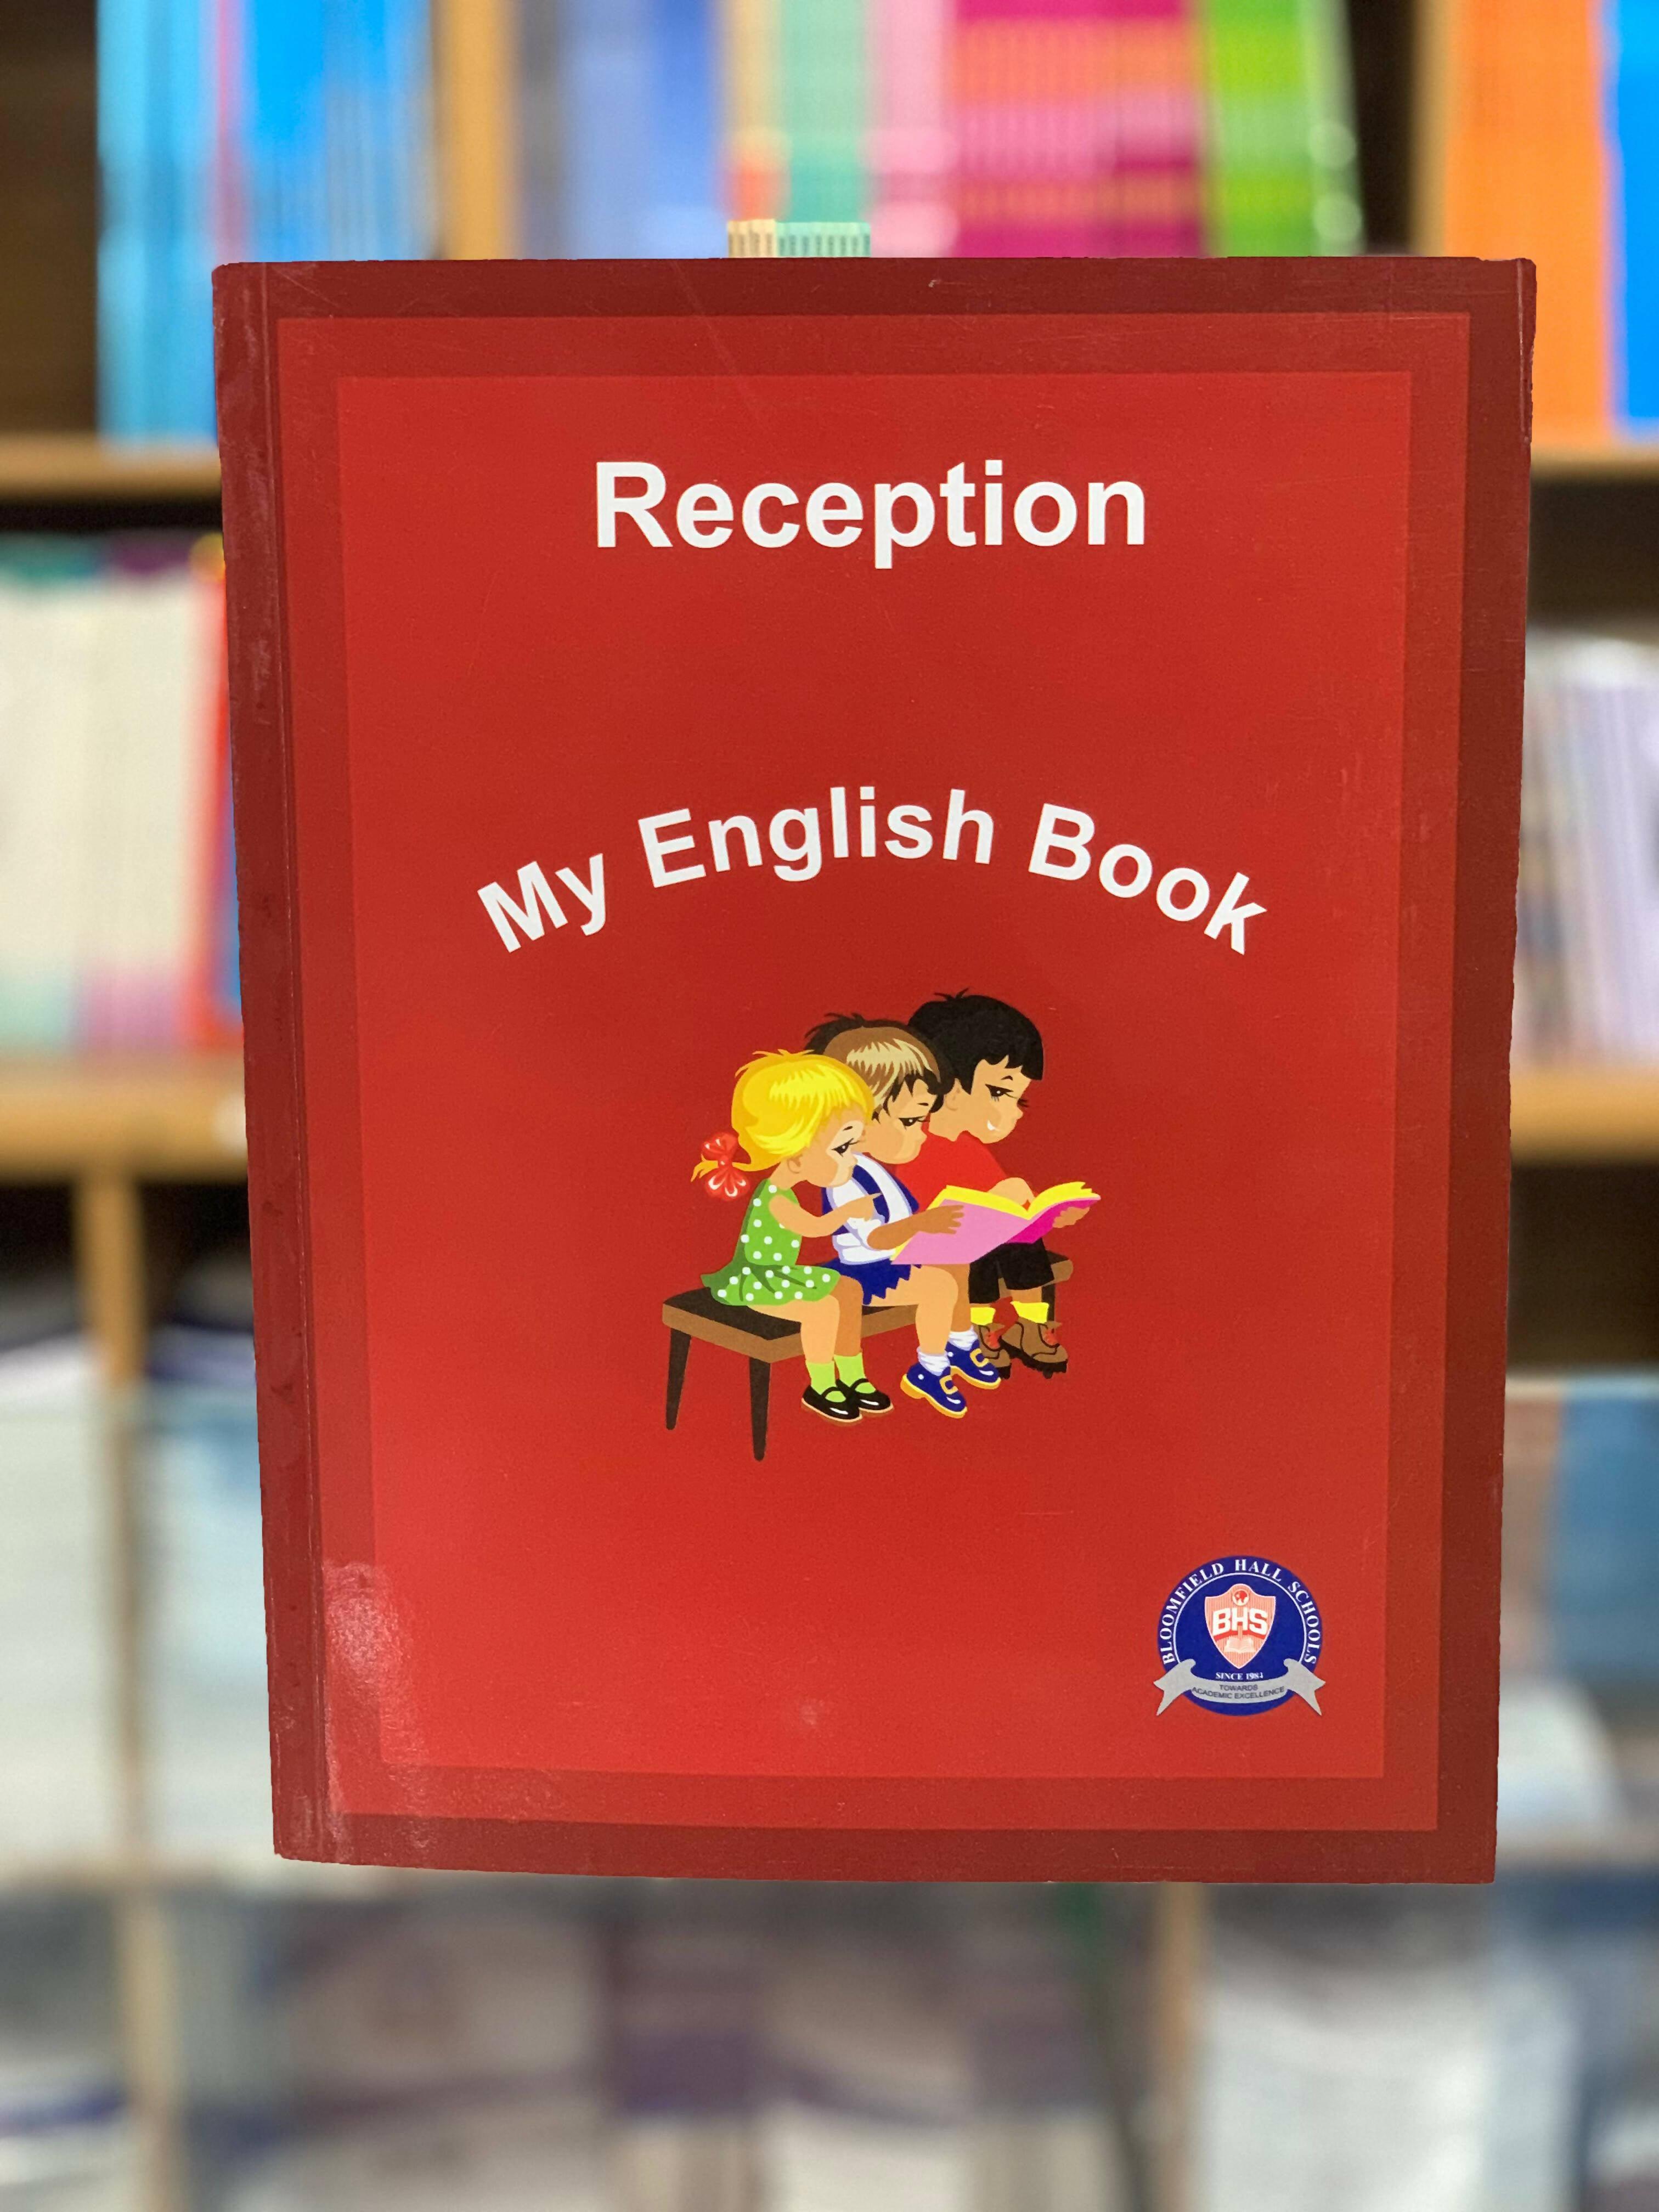 My English Book - Reception - ValueBox